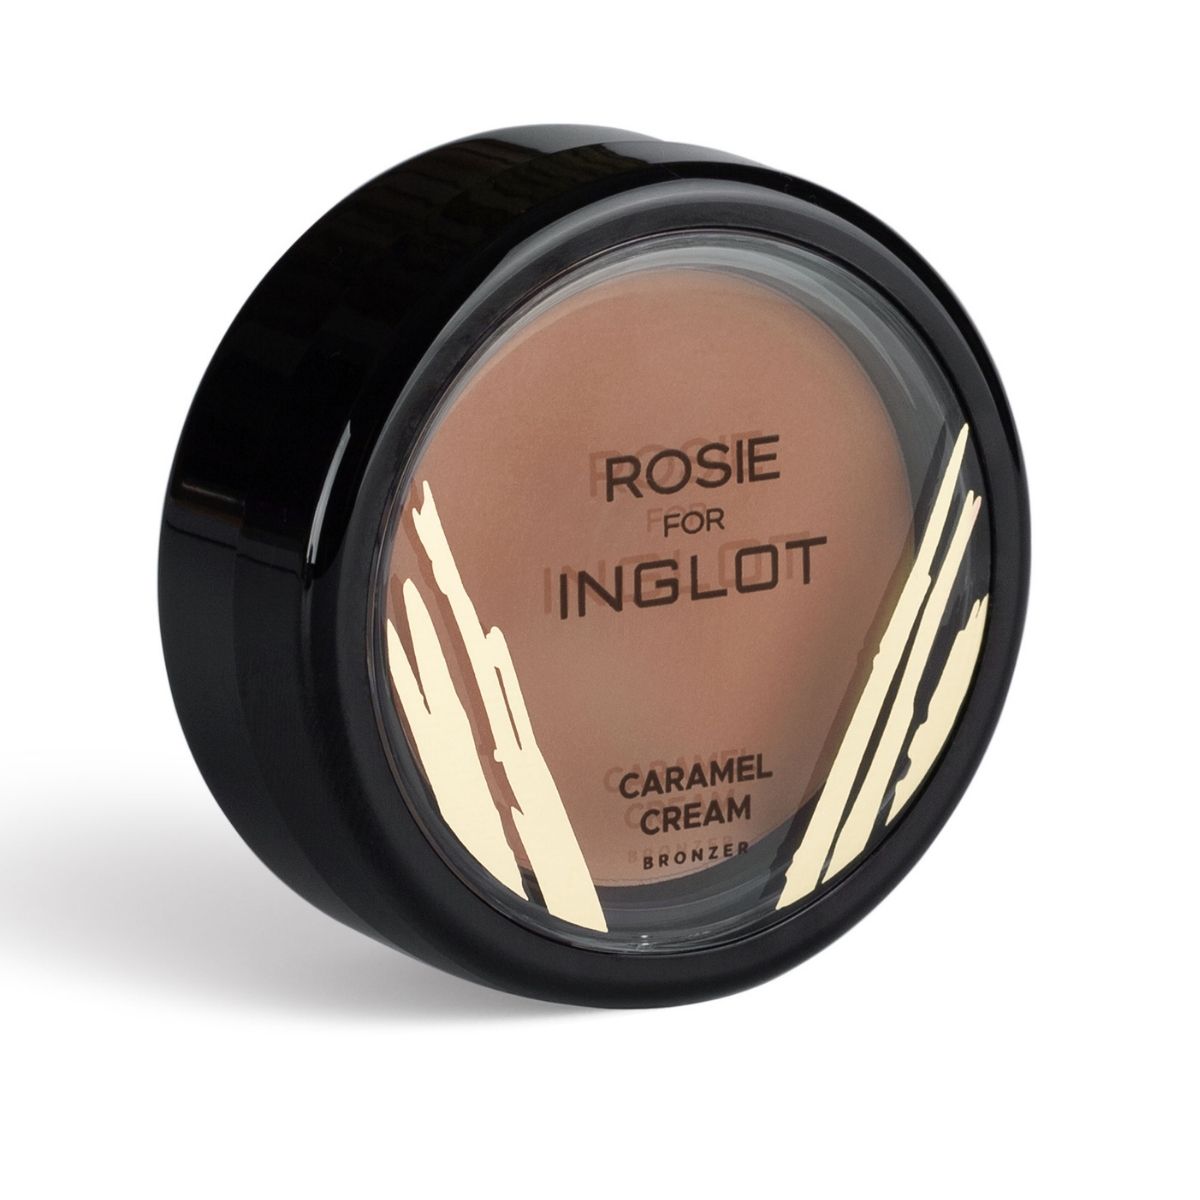 Inglot Rosie for Inglot Caramel Cream Bronzers.